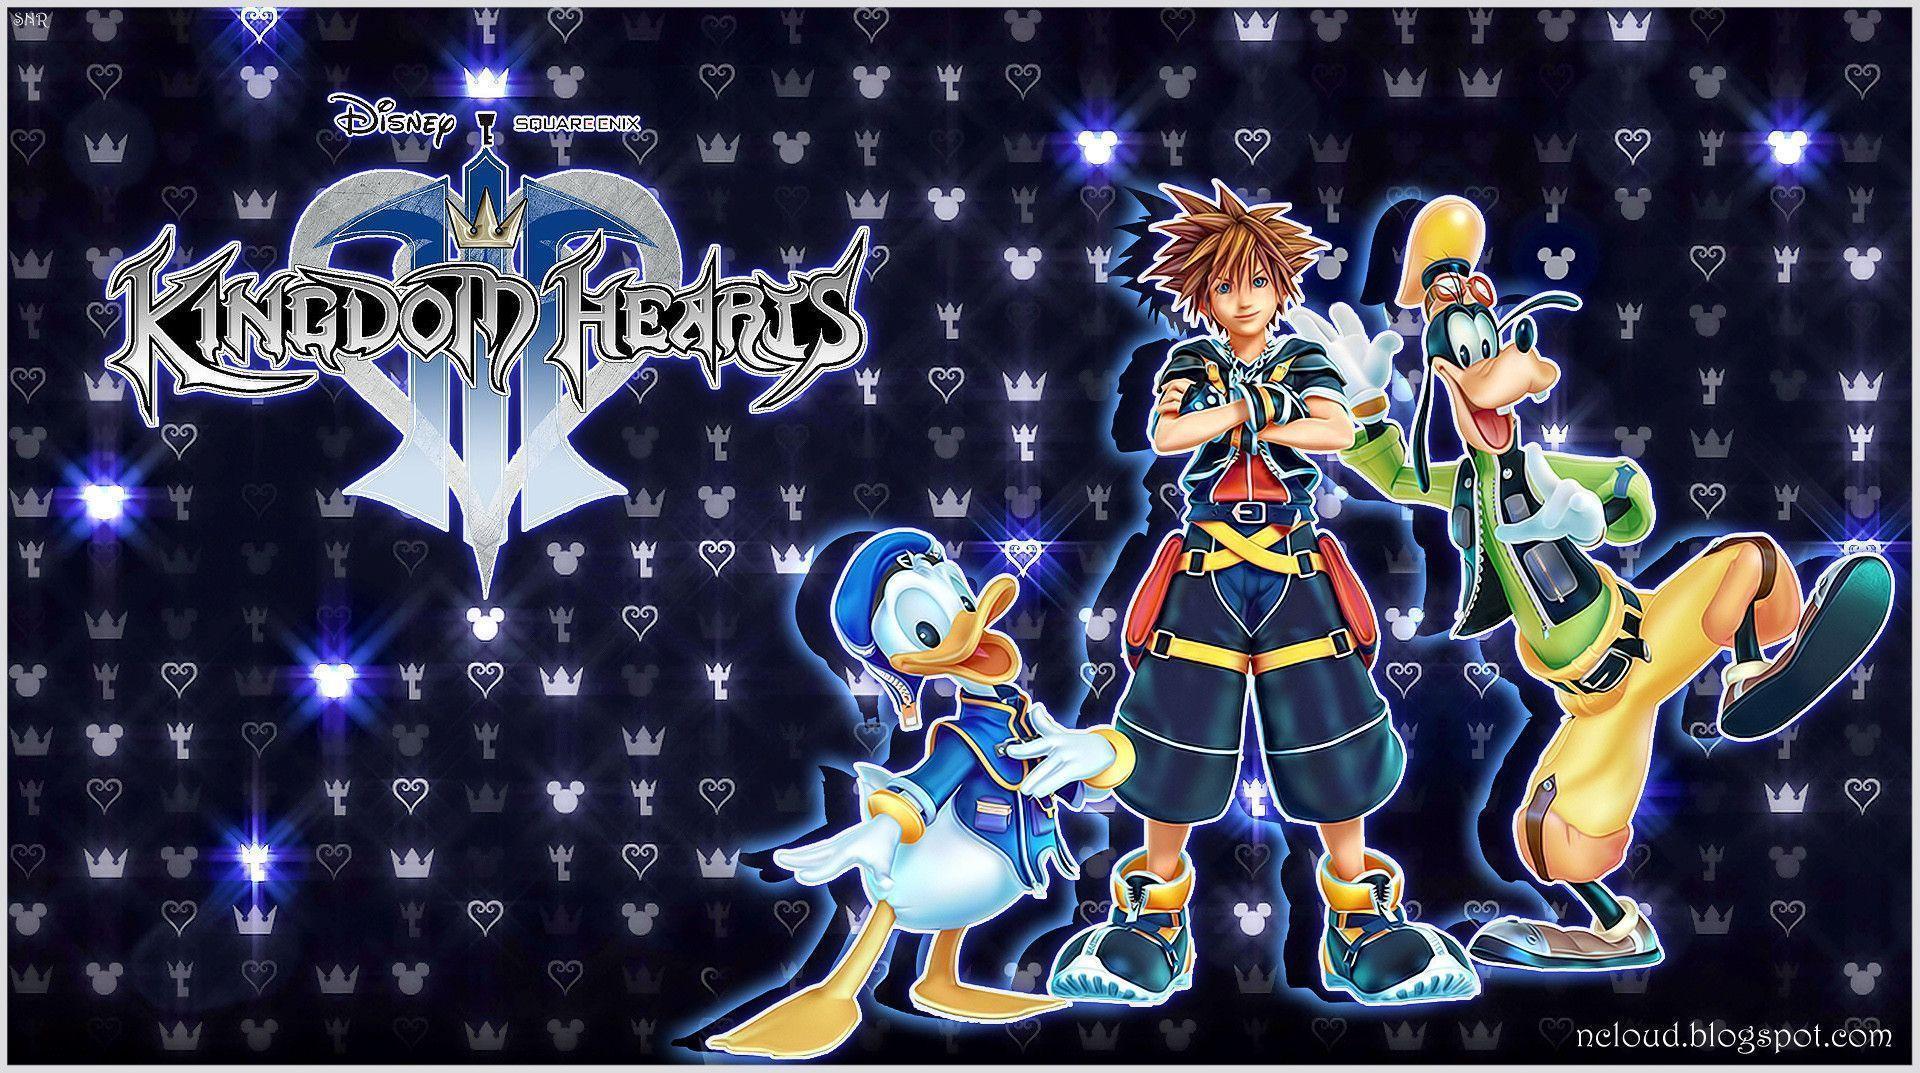 Games Movies Music Anime: My Kingdom Hearts 3 Wallpaper 2